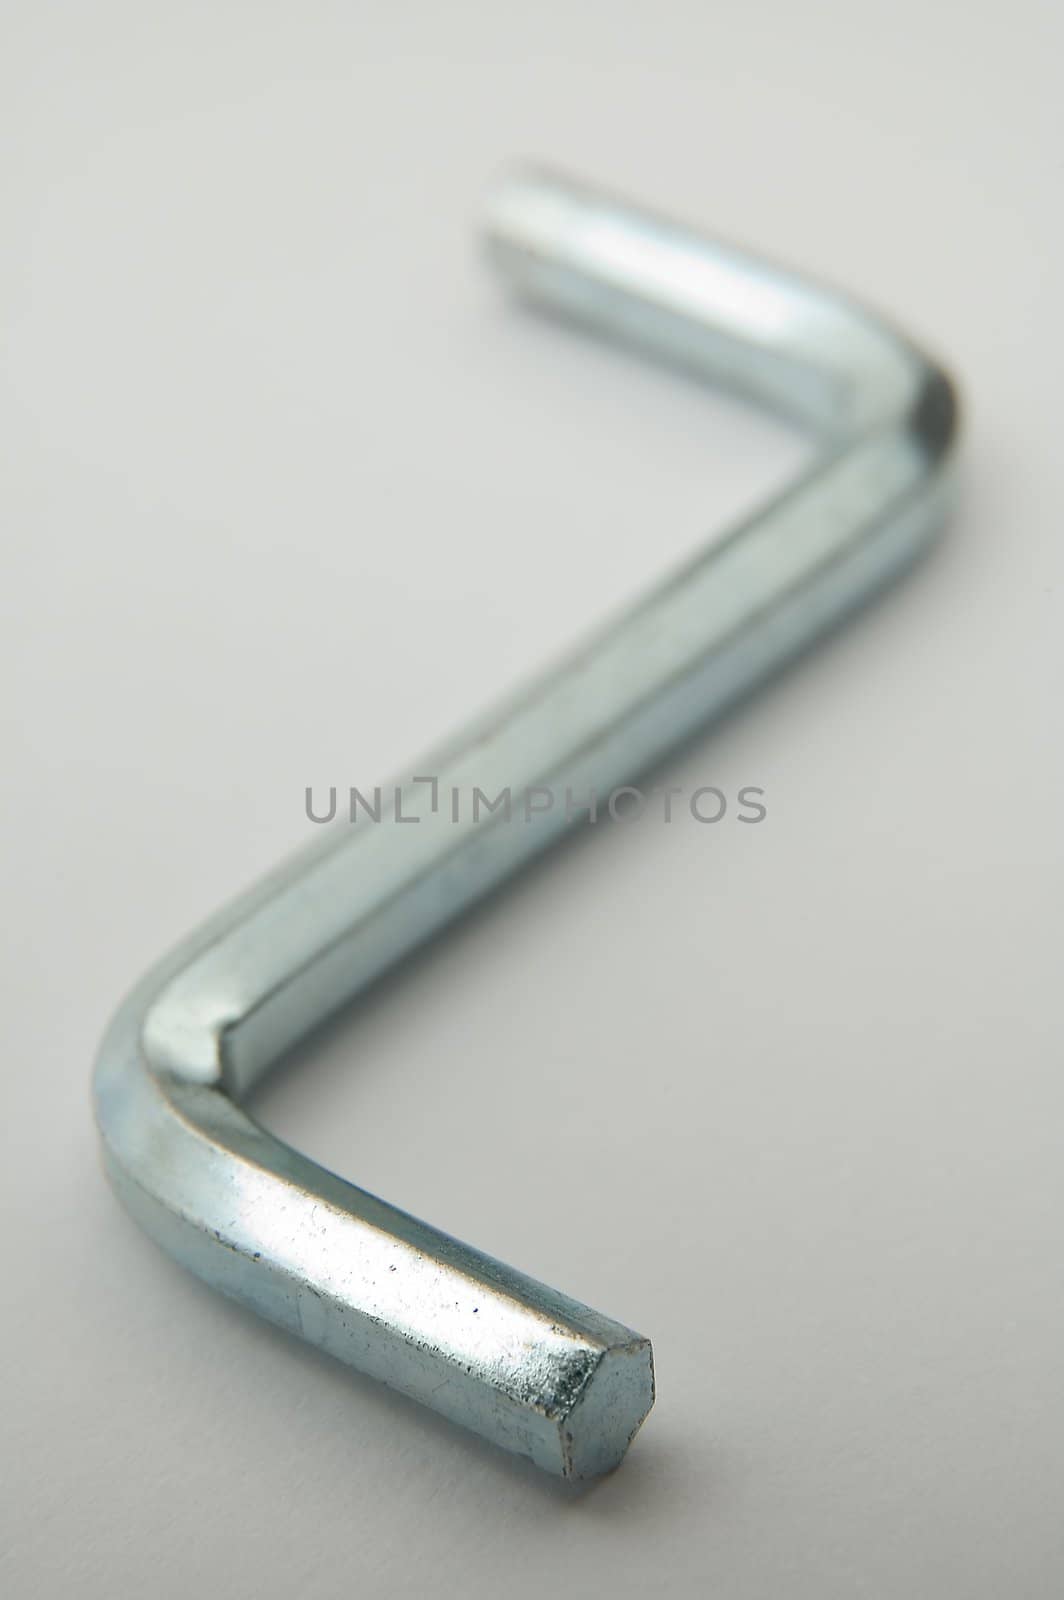 steel shiny hex key on grey background, distance blur